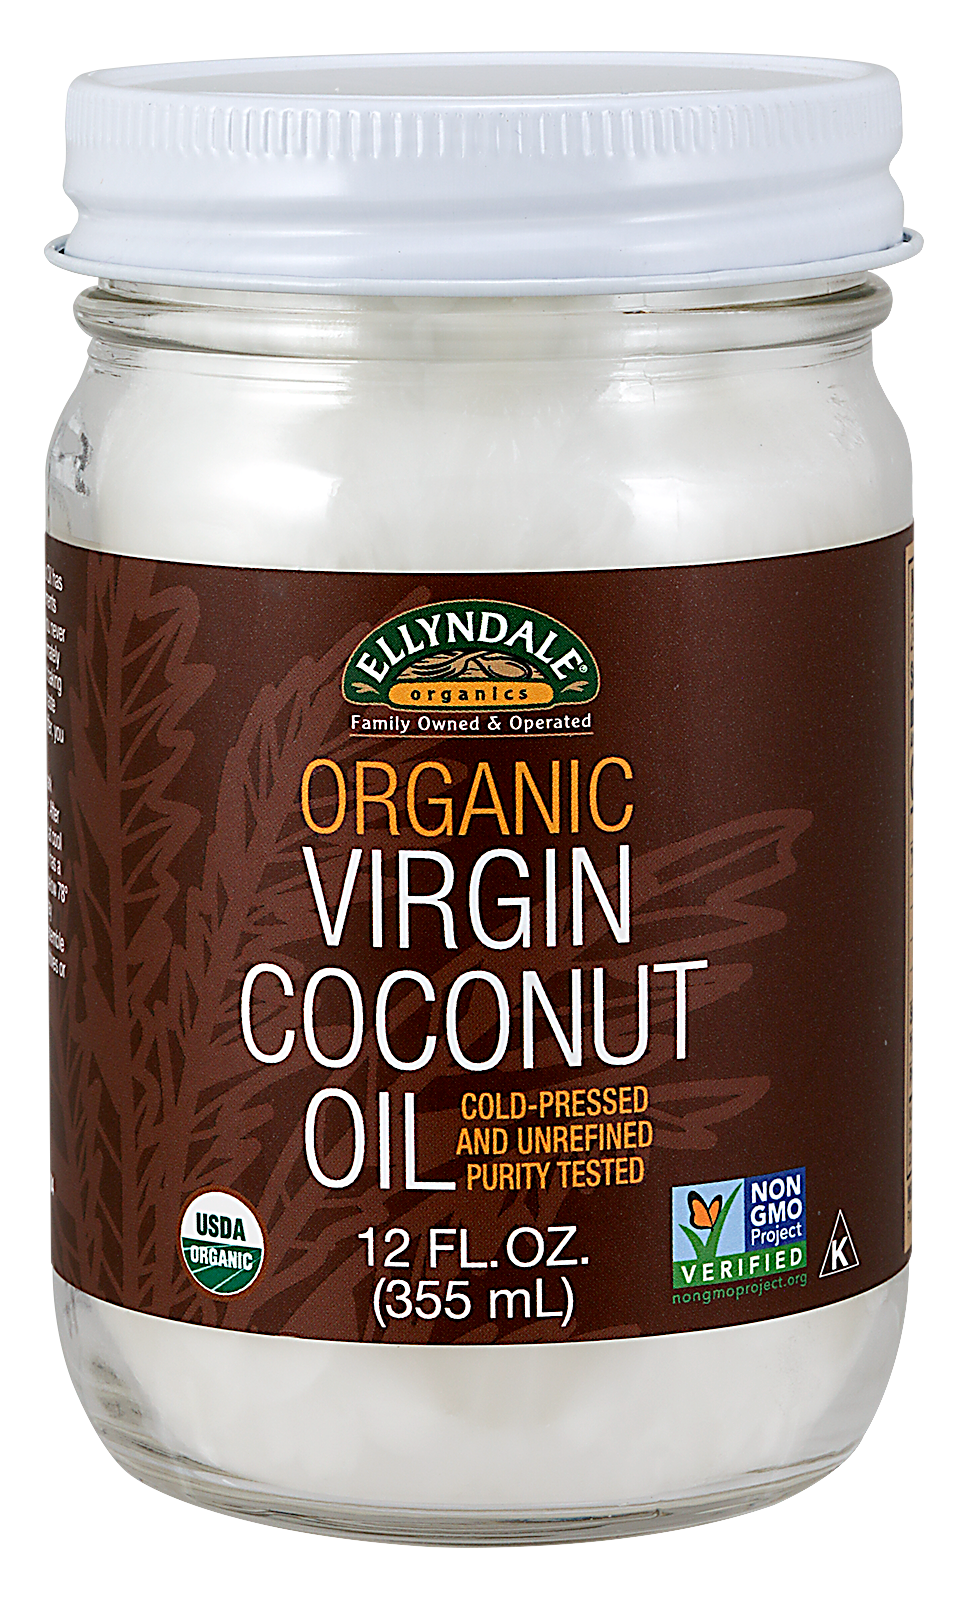 No Preservatives, No Additives - Make Pure Coconut Oil At Home